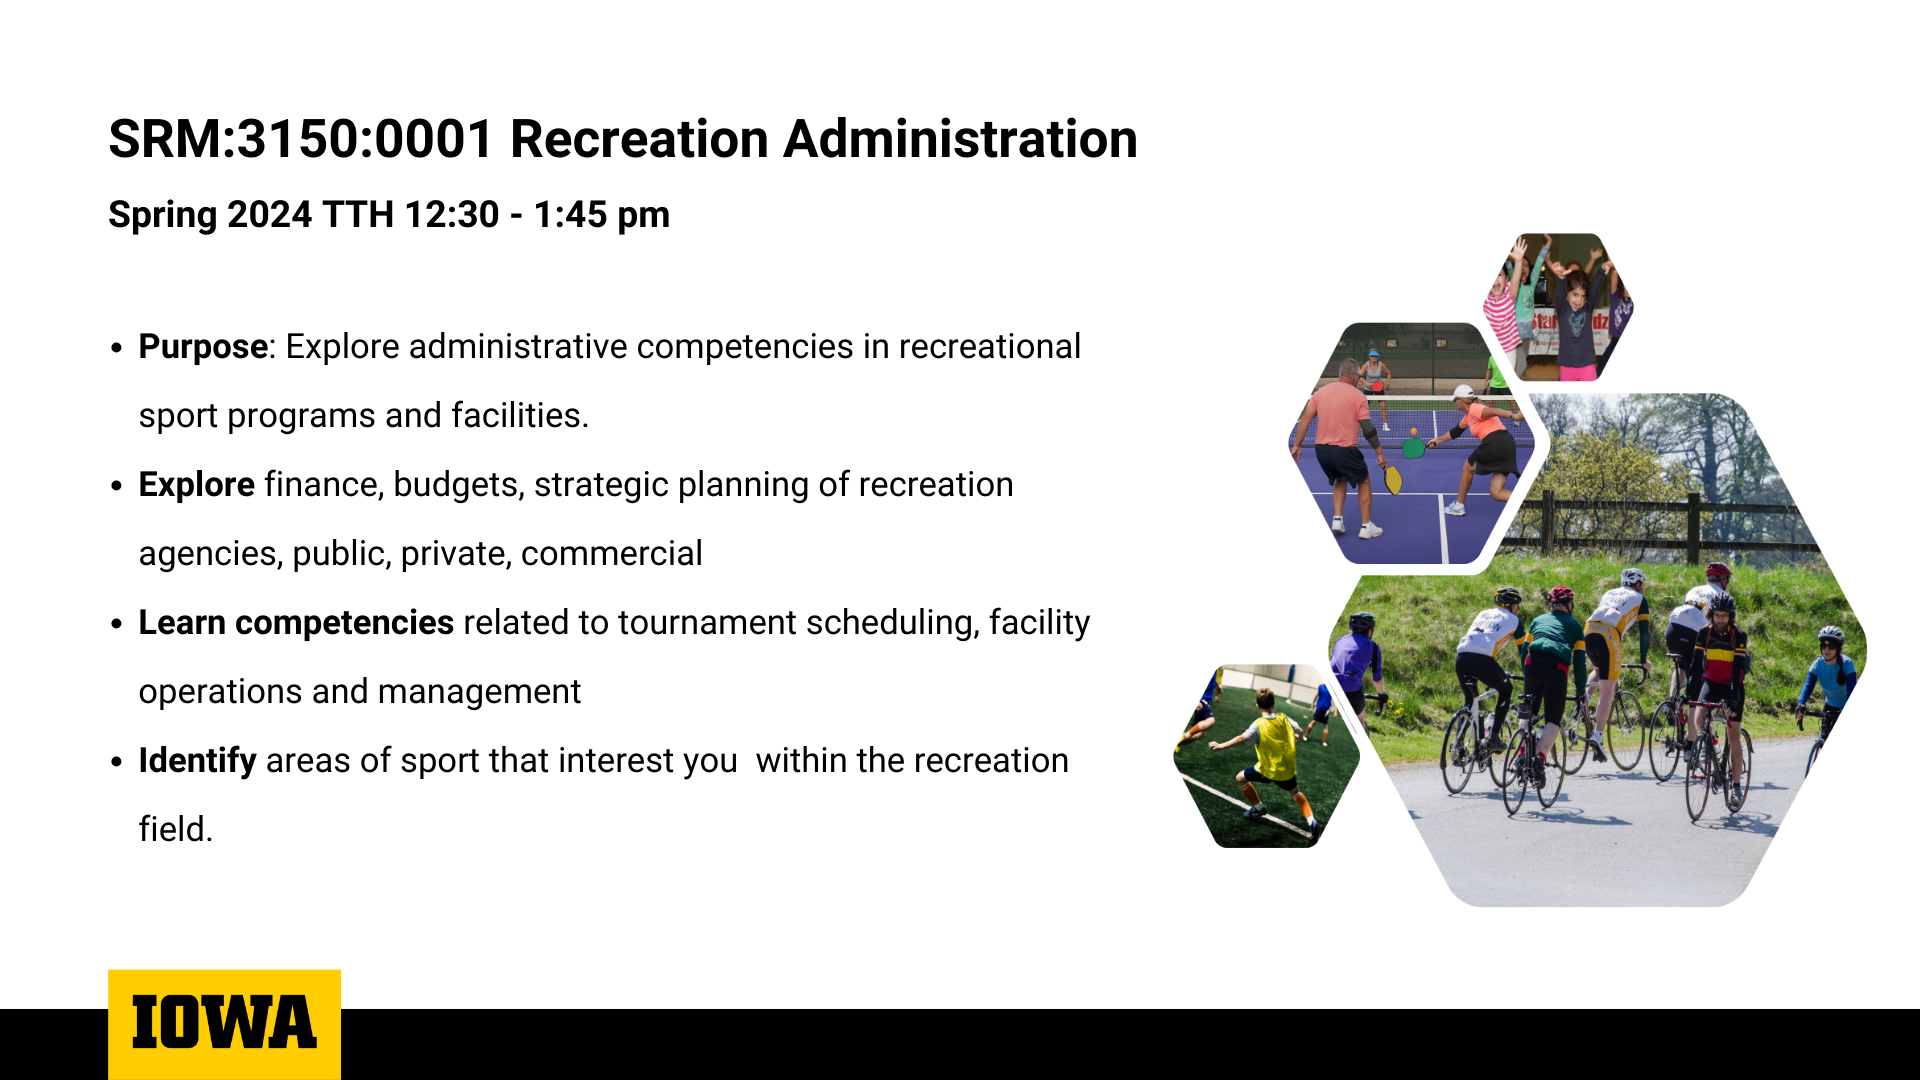 SRM:3150:0001 Recreation Administration course